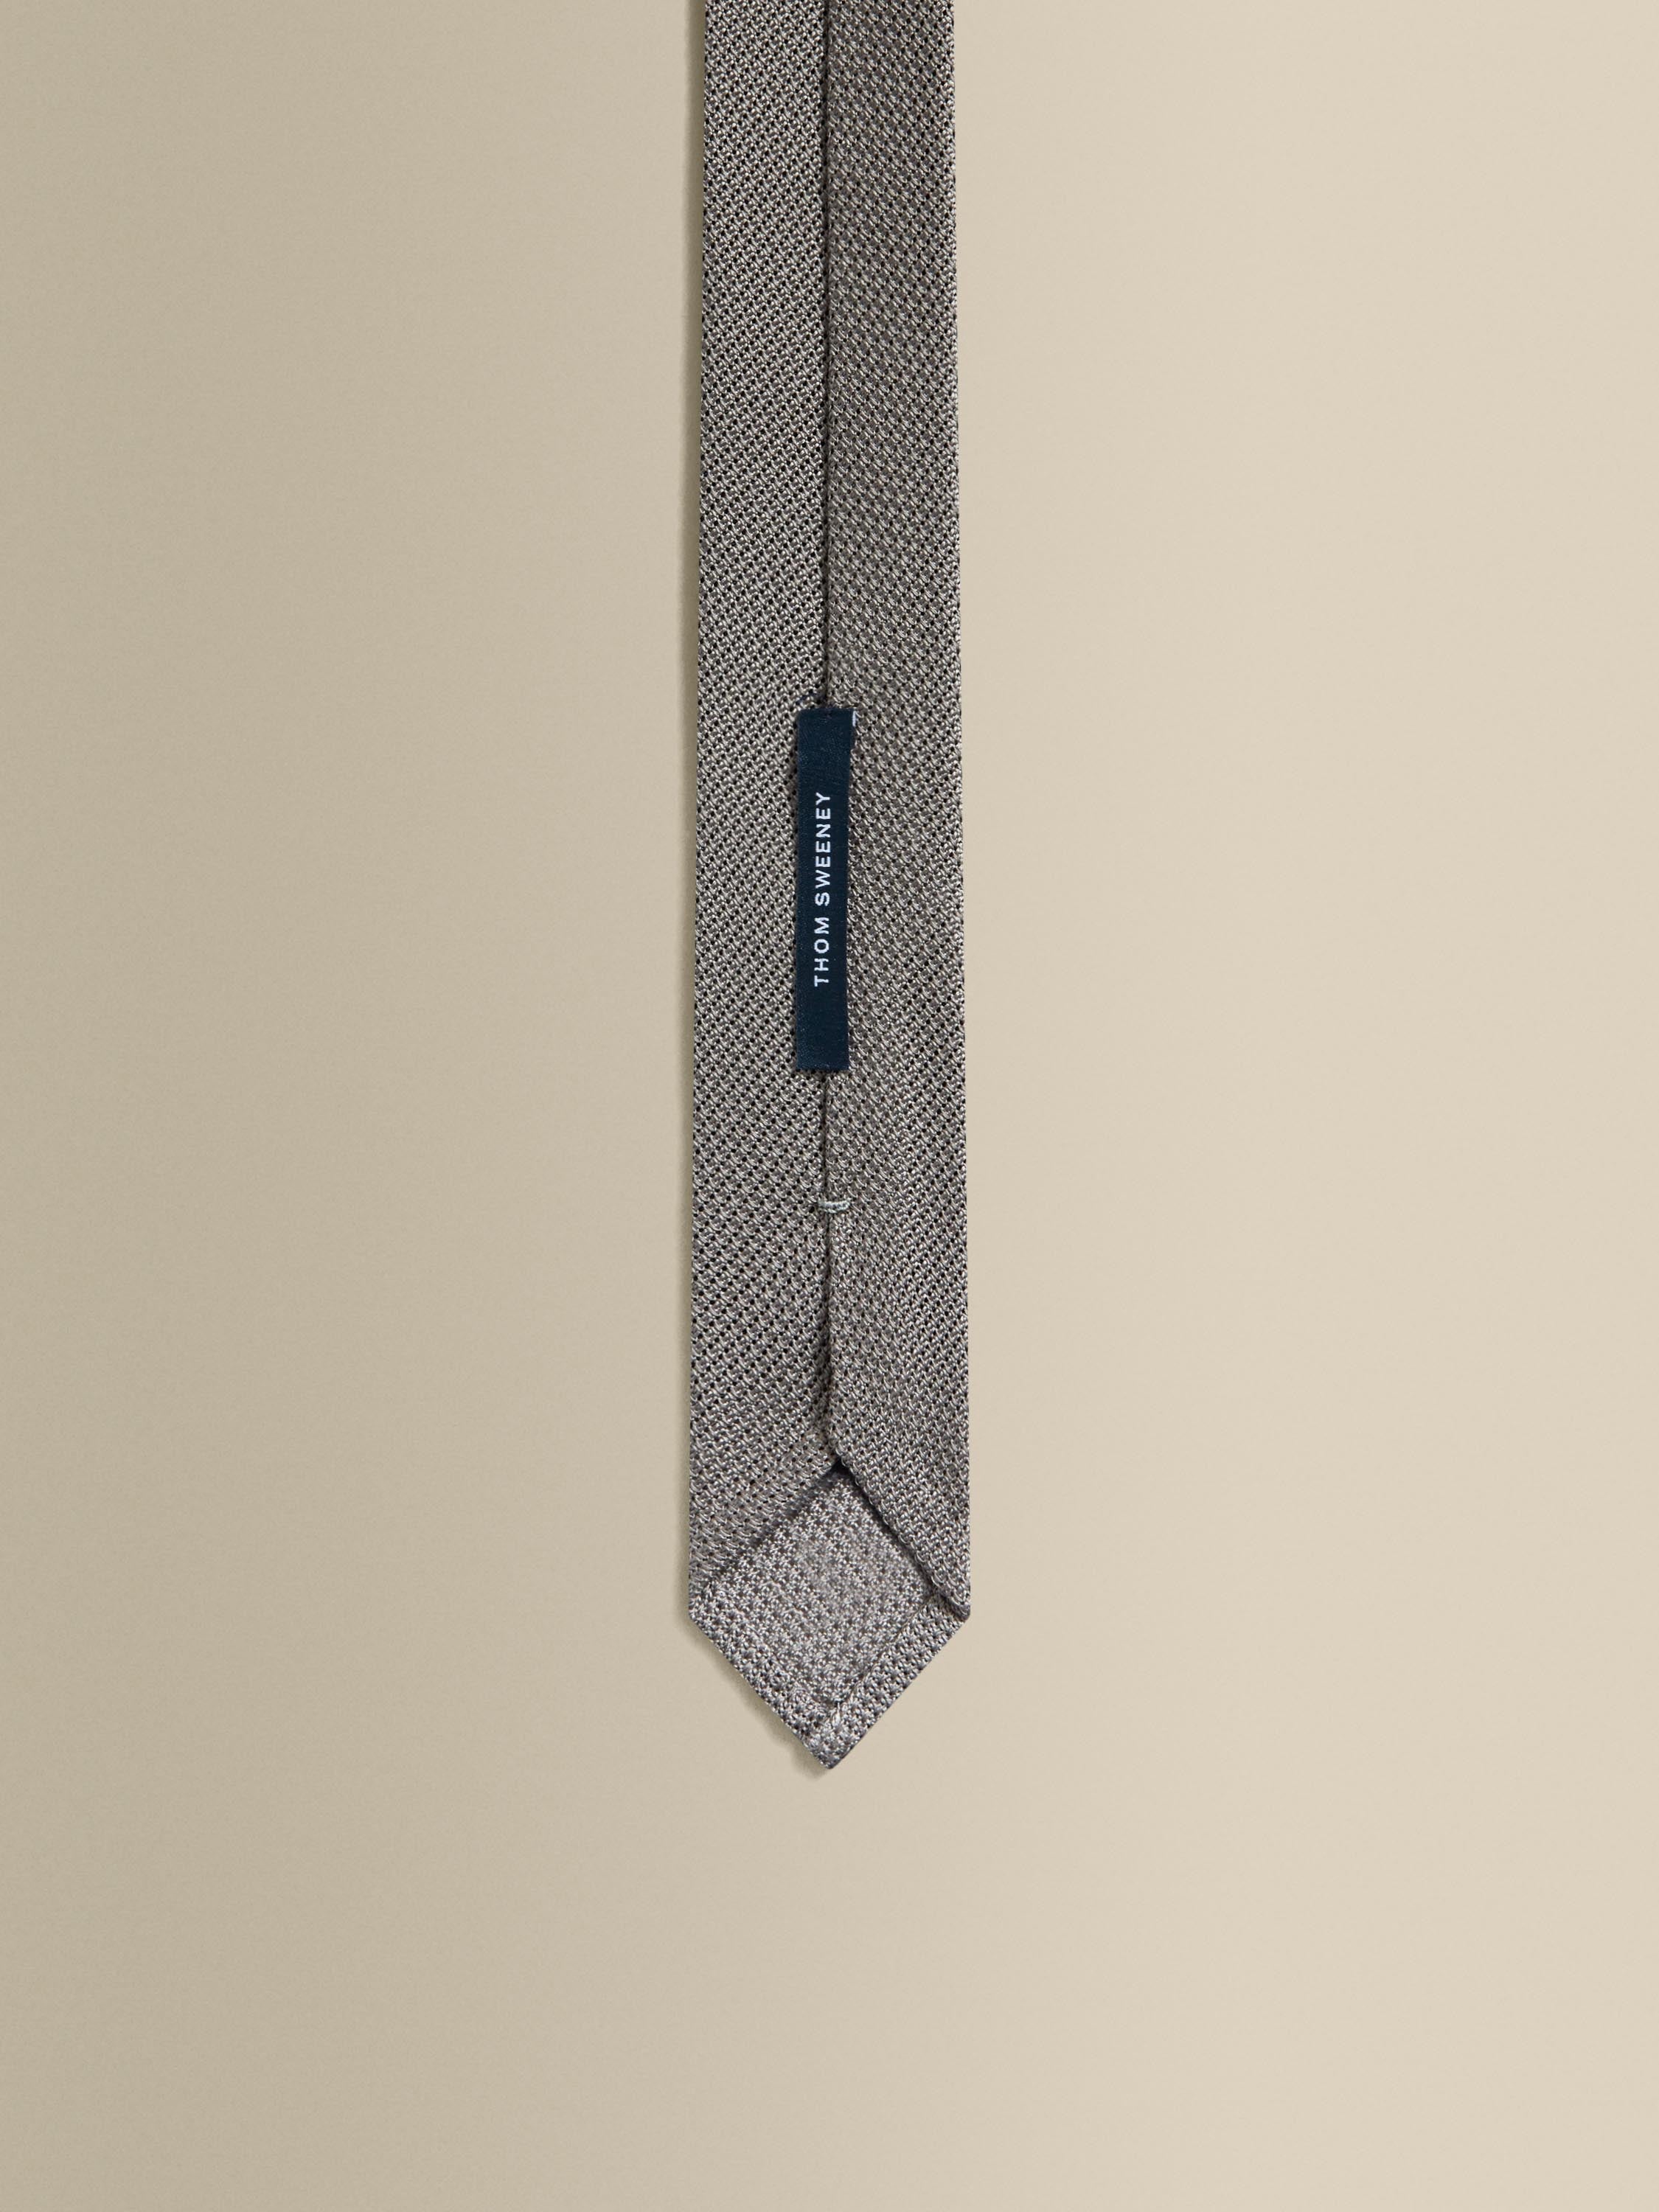 Silk Grenadine Tie Grey Inside Label Product Image